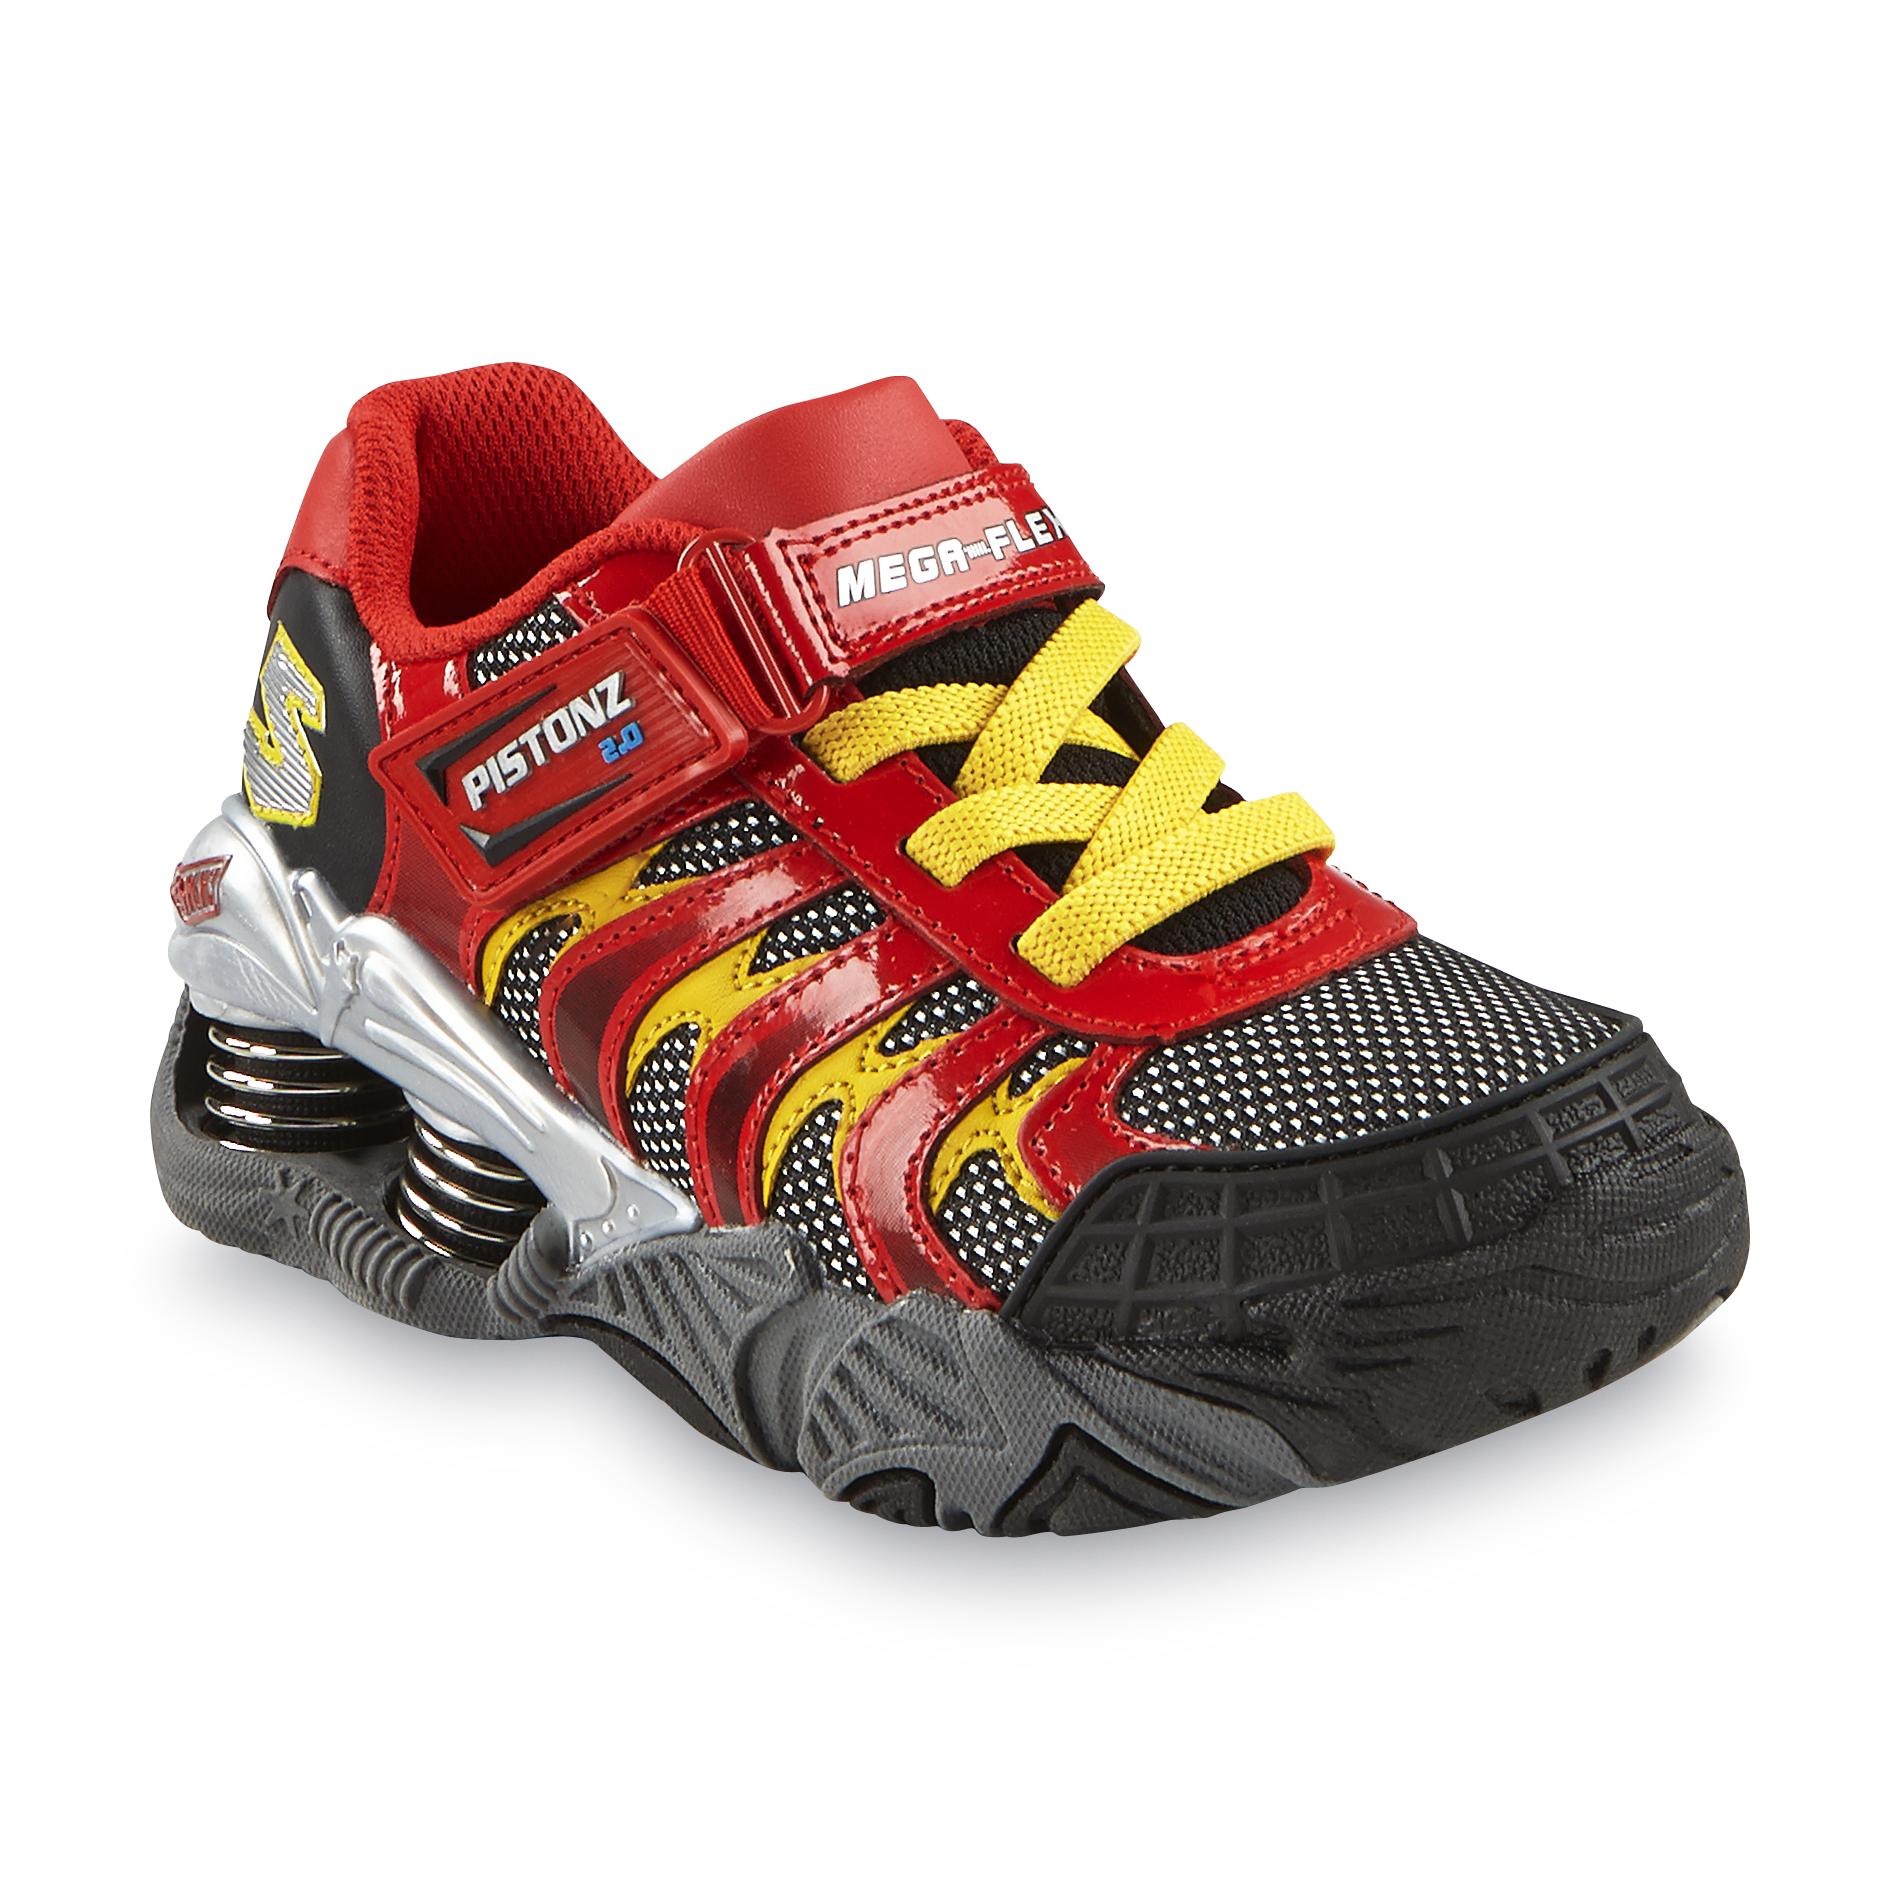 Skechers Boy's Mega Flex Pistonz Pillage Red/Black/Yellow/Grey Athletic Shoe